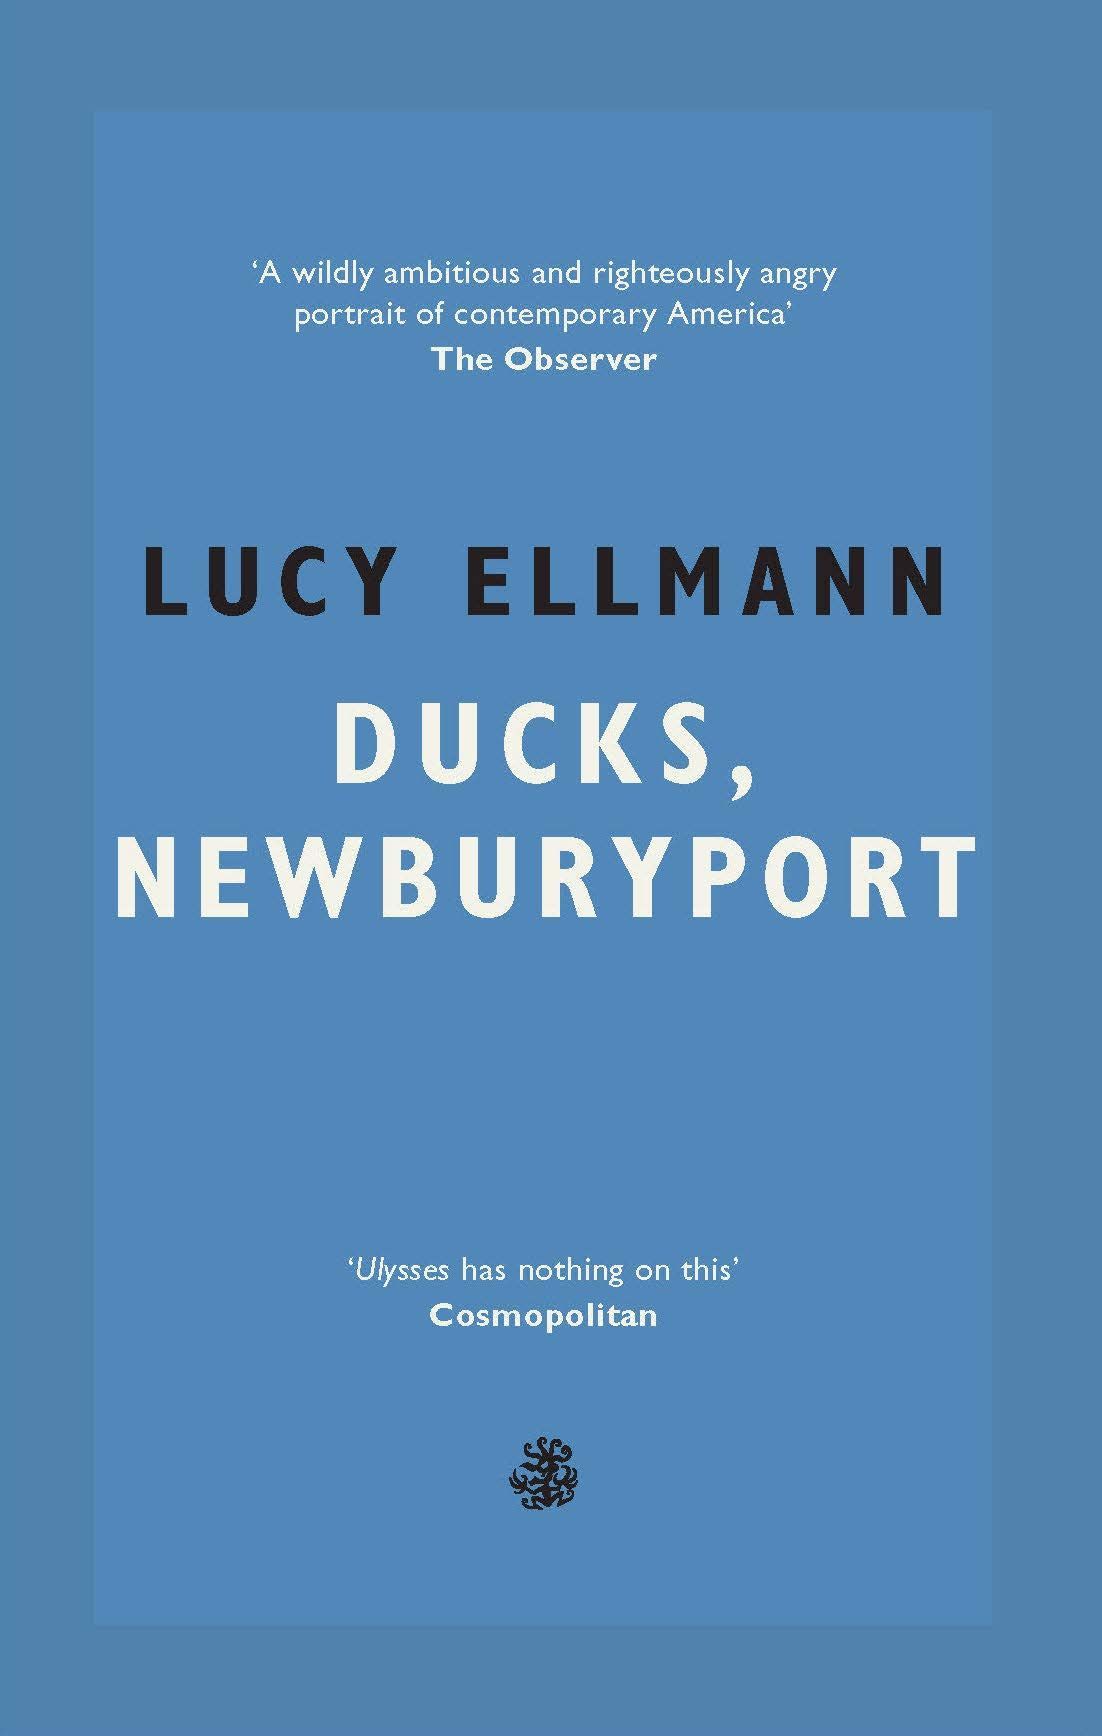 Lucy Ellmannová:Ducks, Newburyport